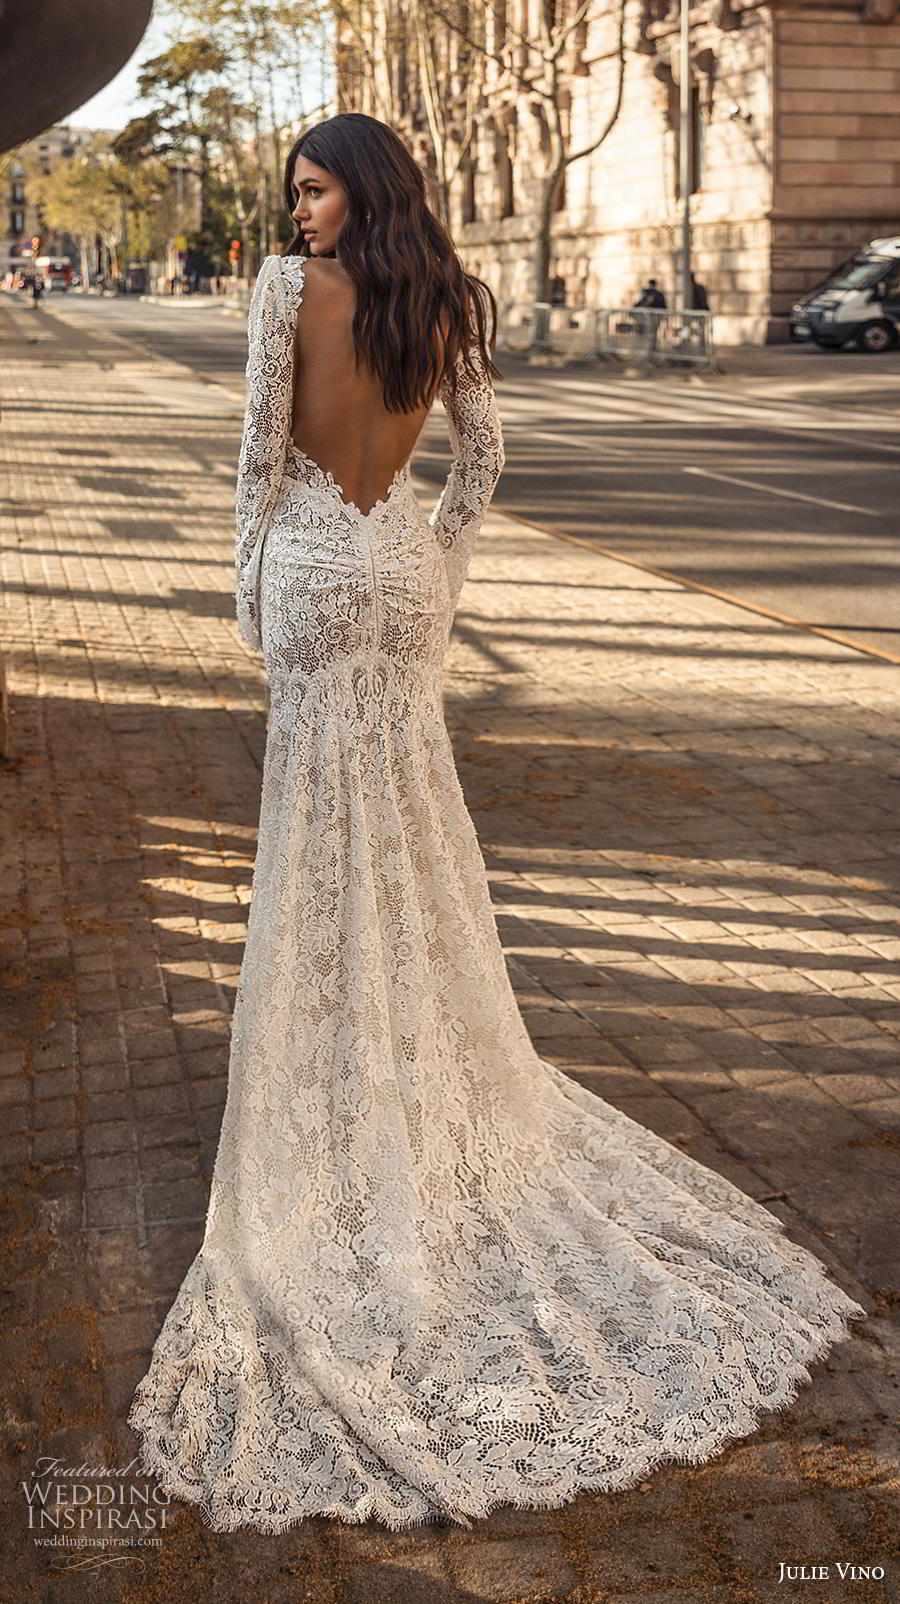 julie vino 2020 barcelona bridal long sleeves deep v neck full embellishment elegant fit and flare wedding dress backless low back medium train (6) bv